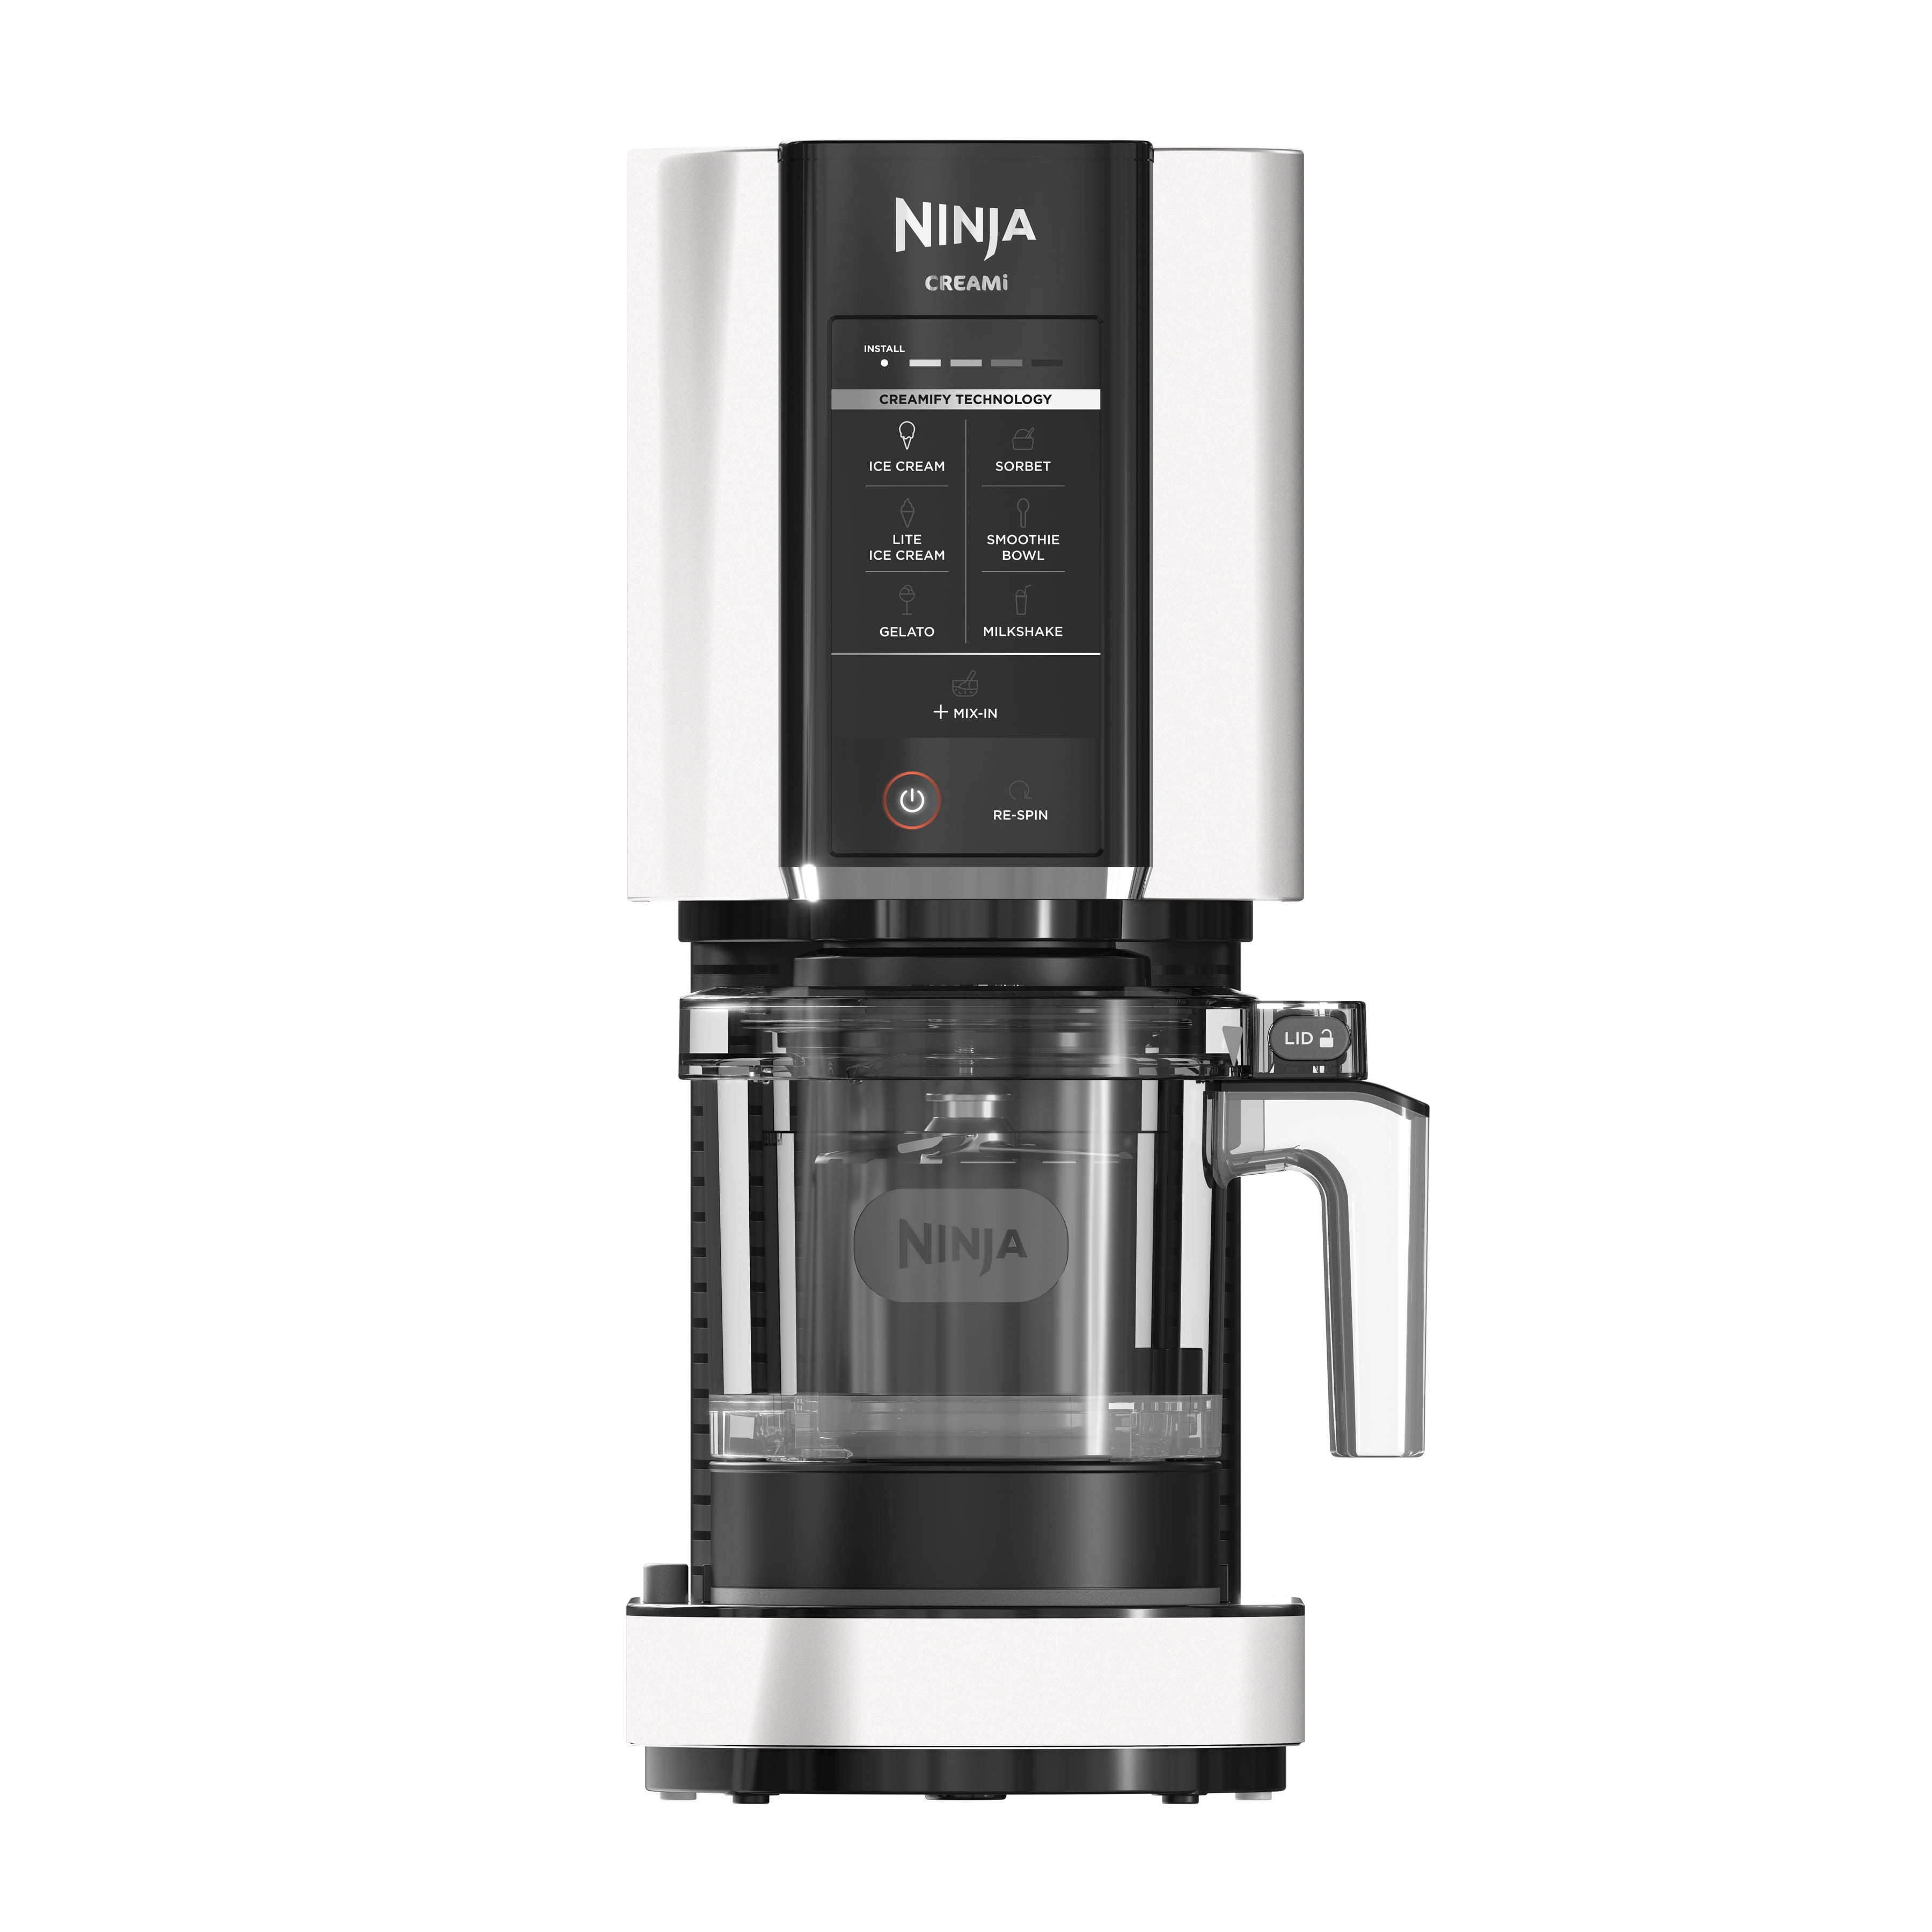 Ninja Creami NC301 - appliances - by owner - sale - craigslist